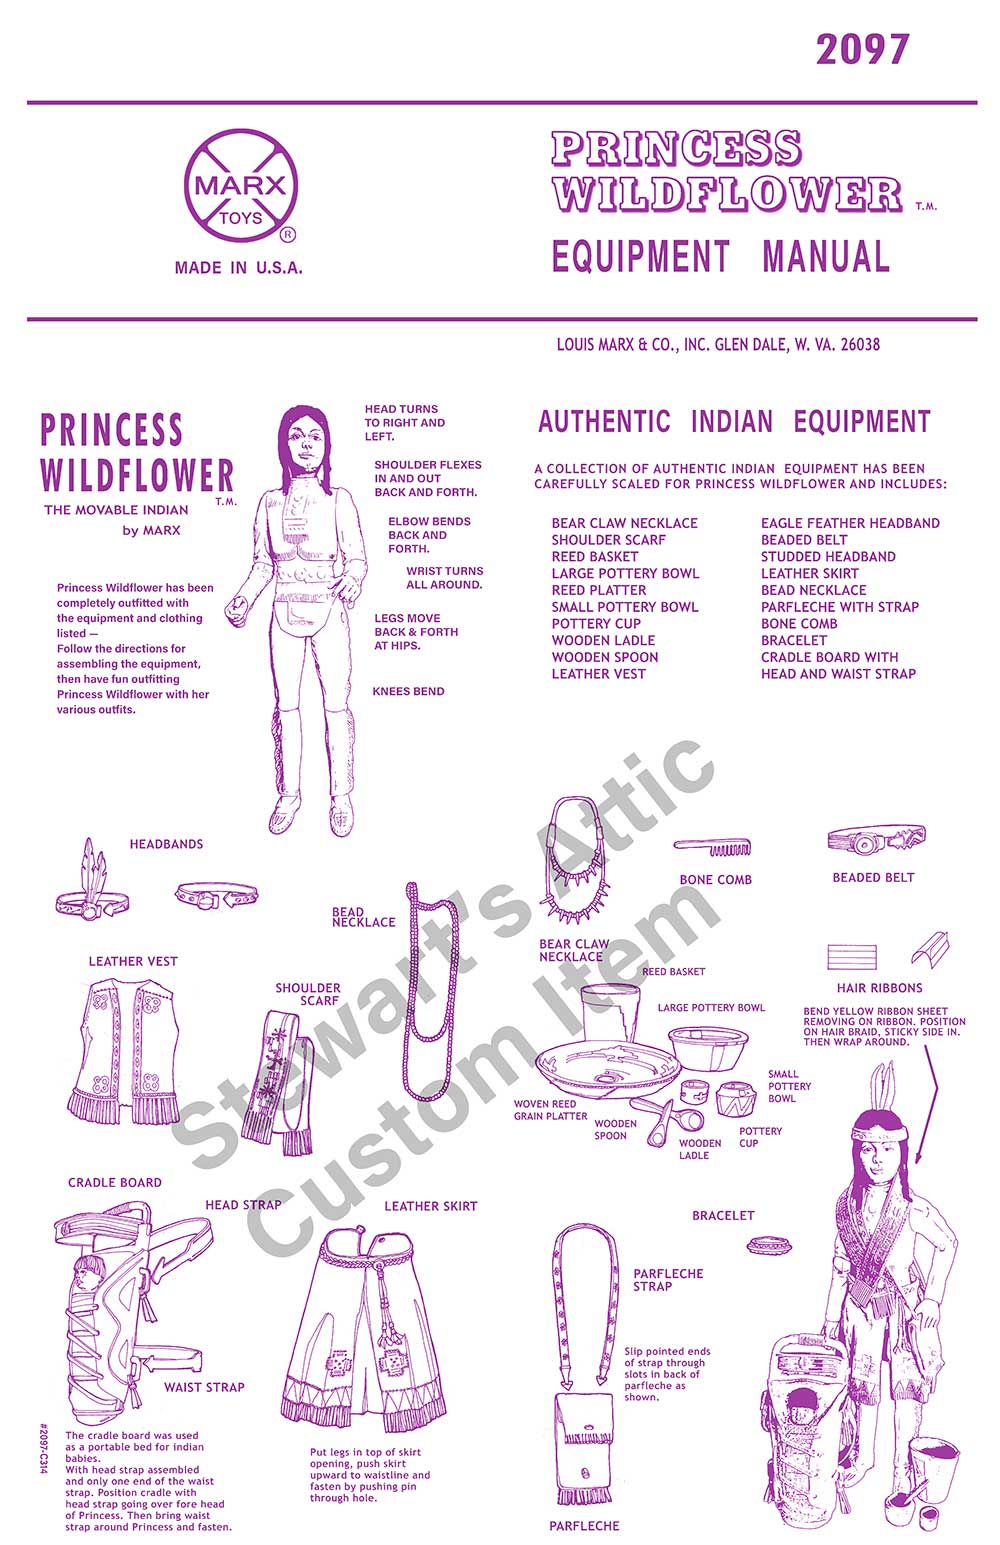 Princess Wildflower - MOD Style - Fantasy Equipment Manual